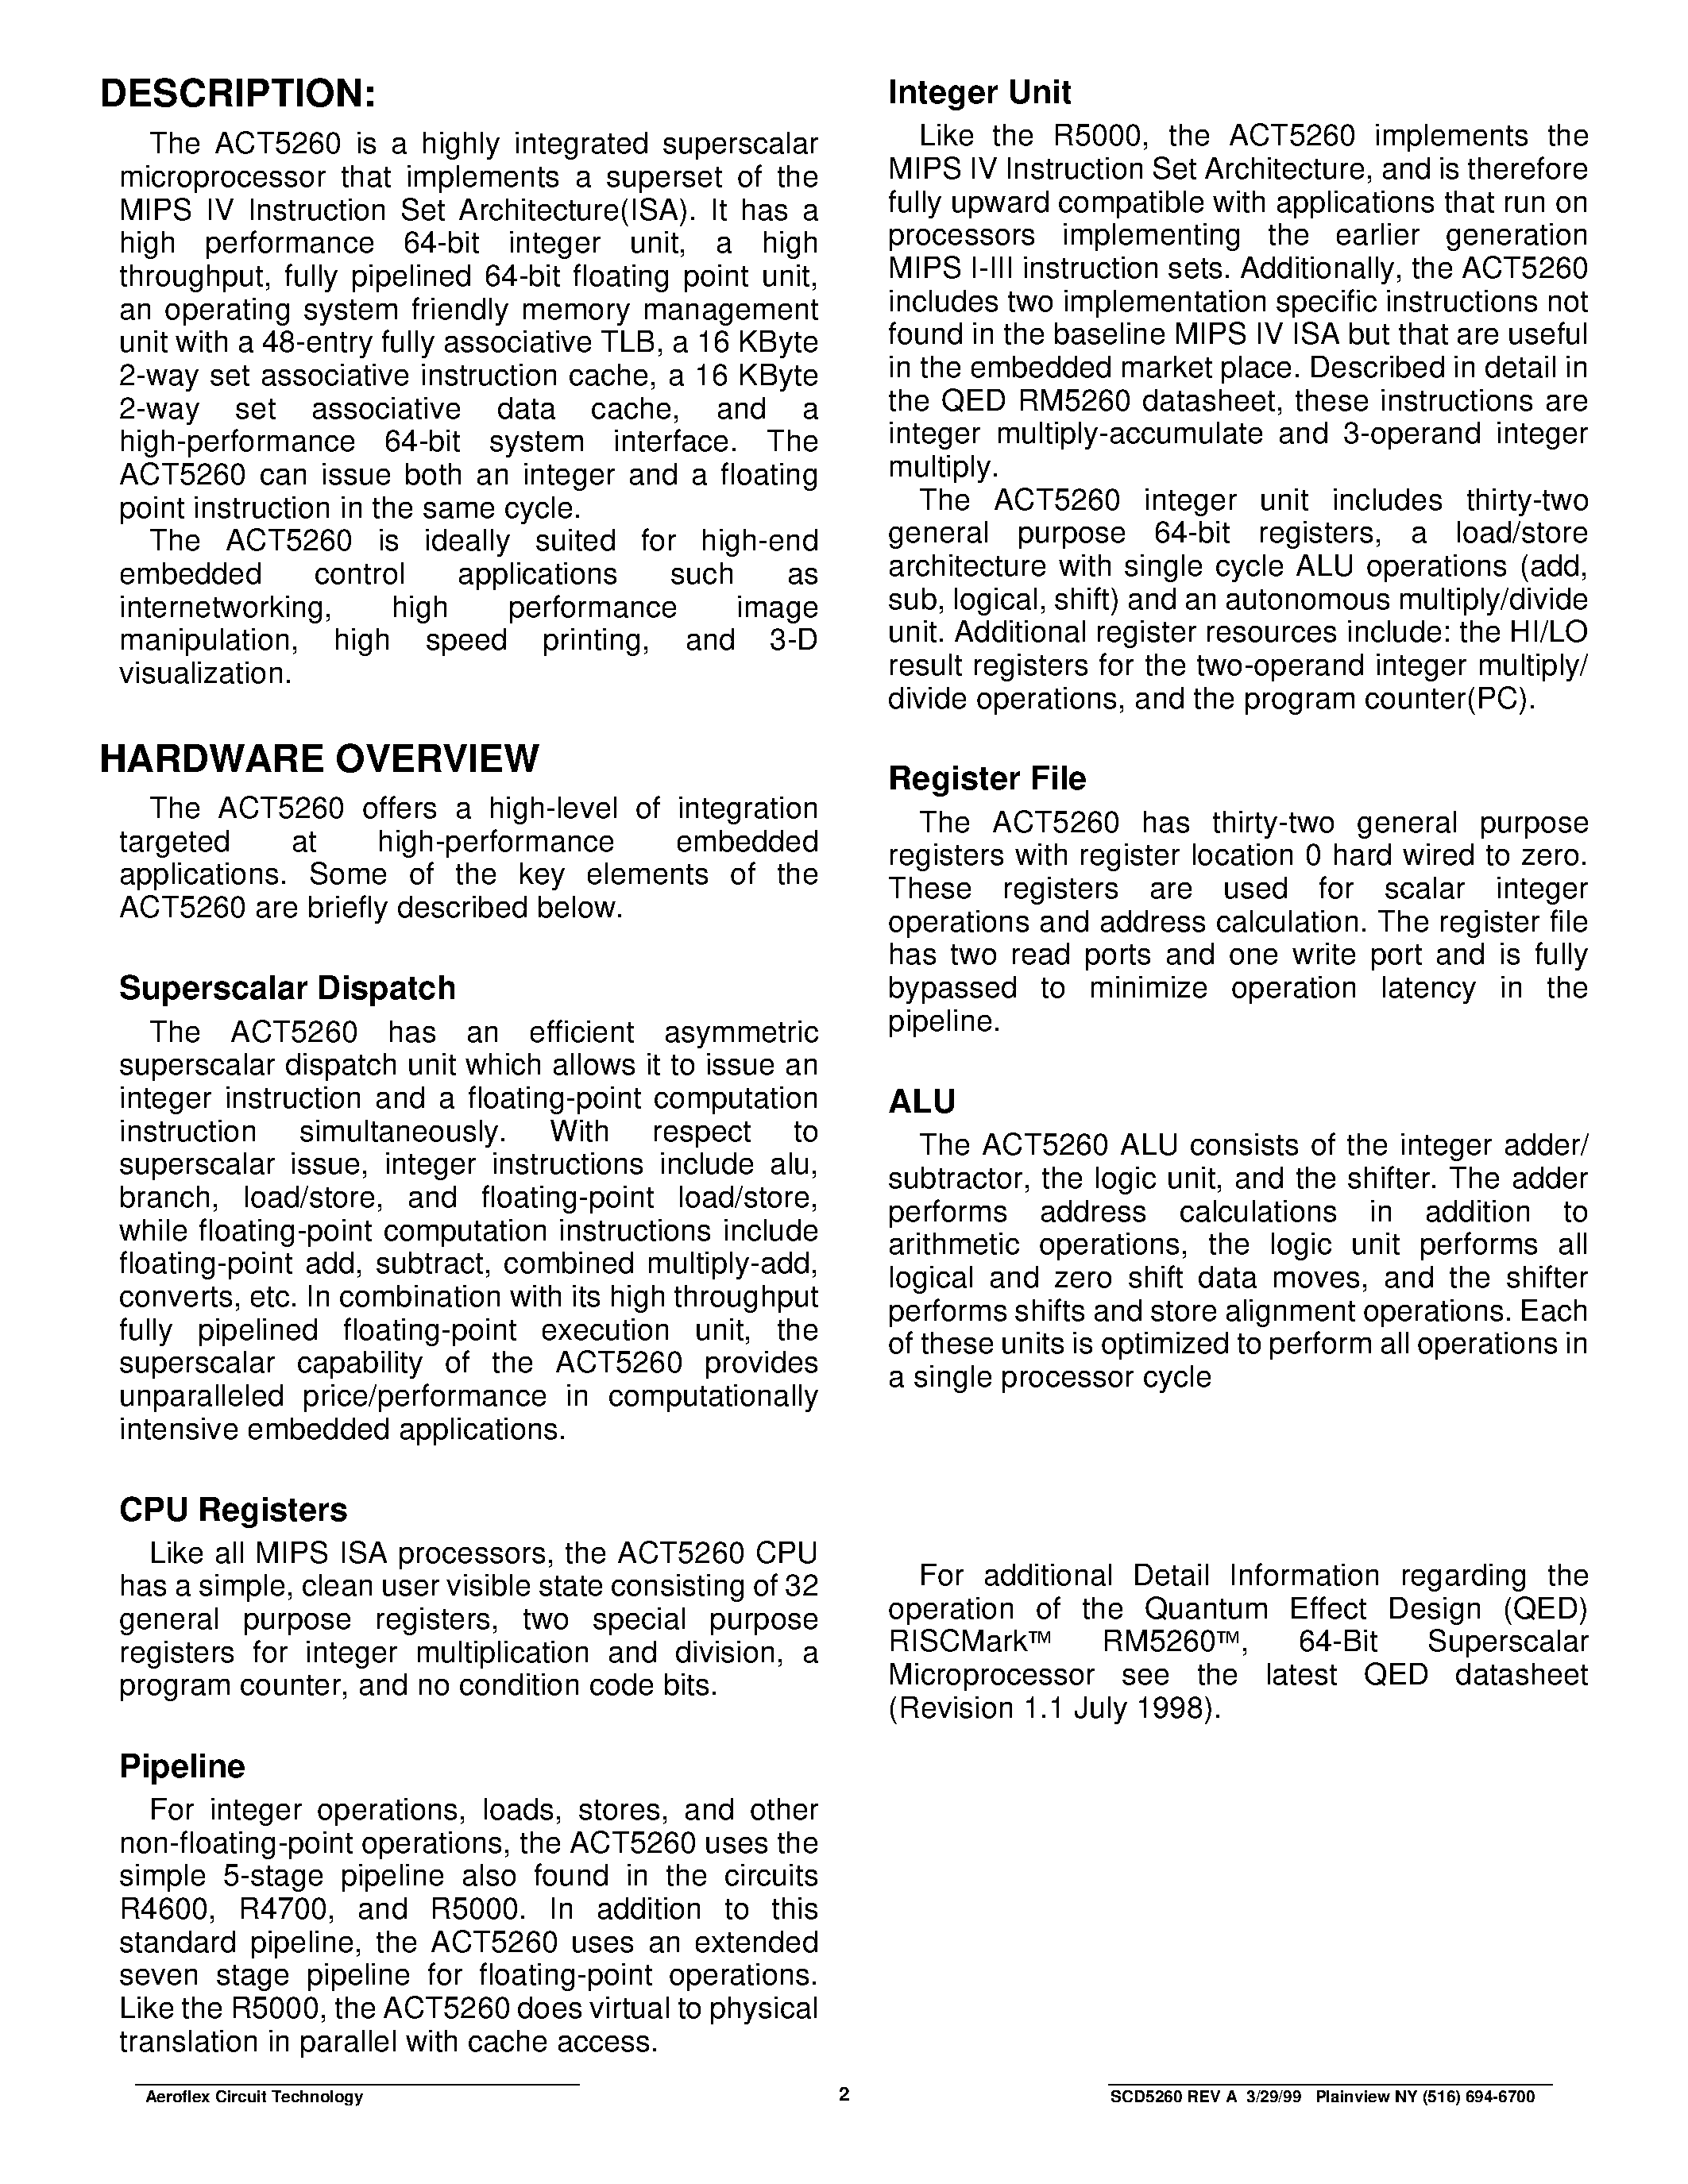 Datasheet ACT-5260PC-100P10C - ACT5260 64-Bit Superscaler Microprocessor page 2